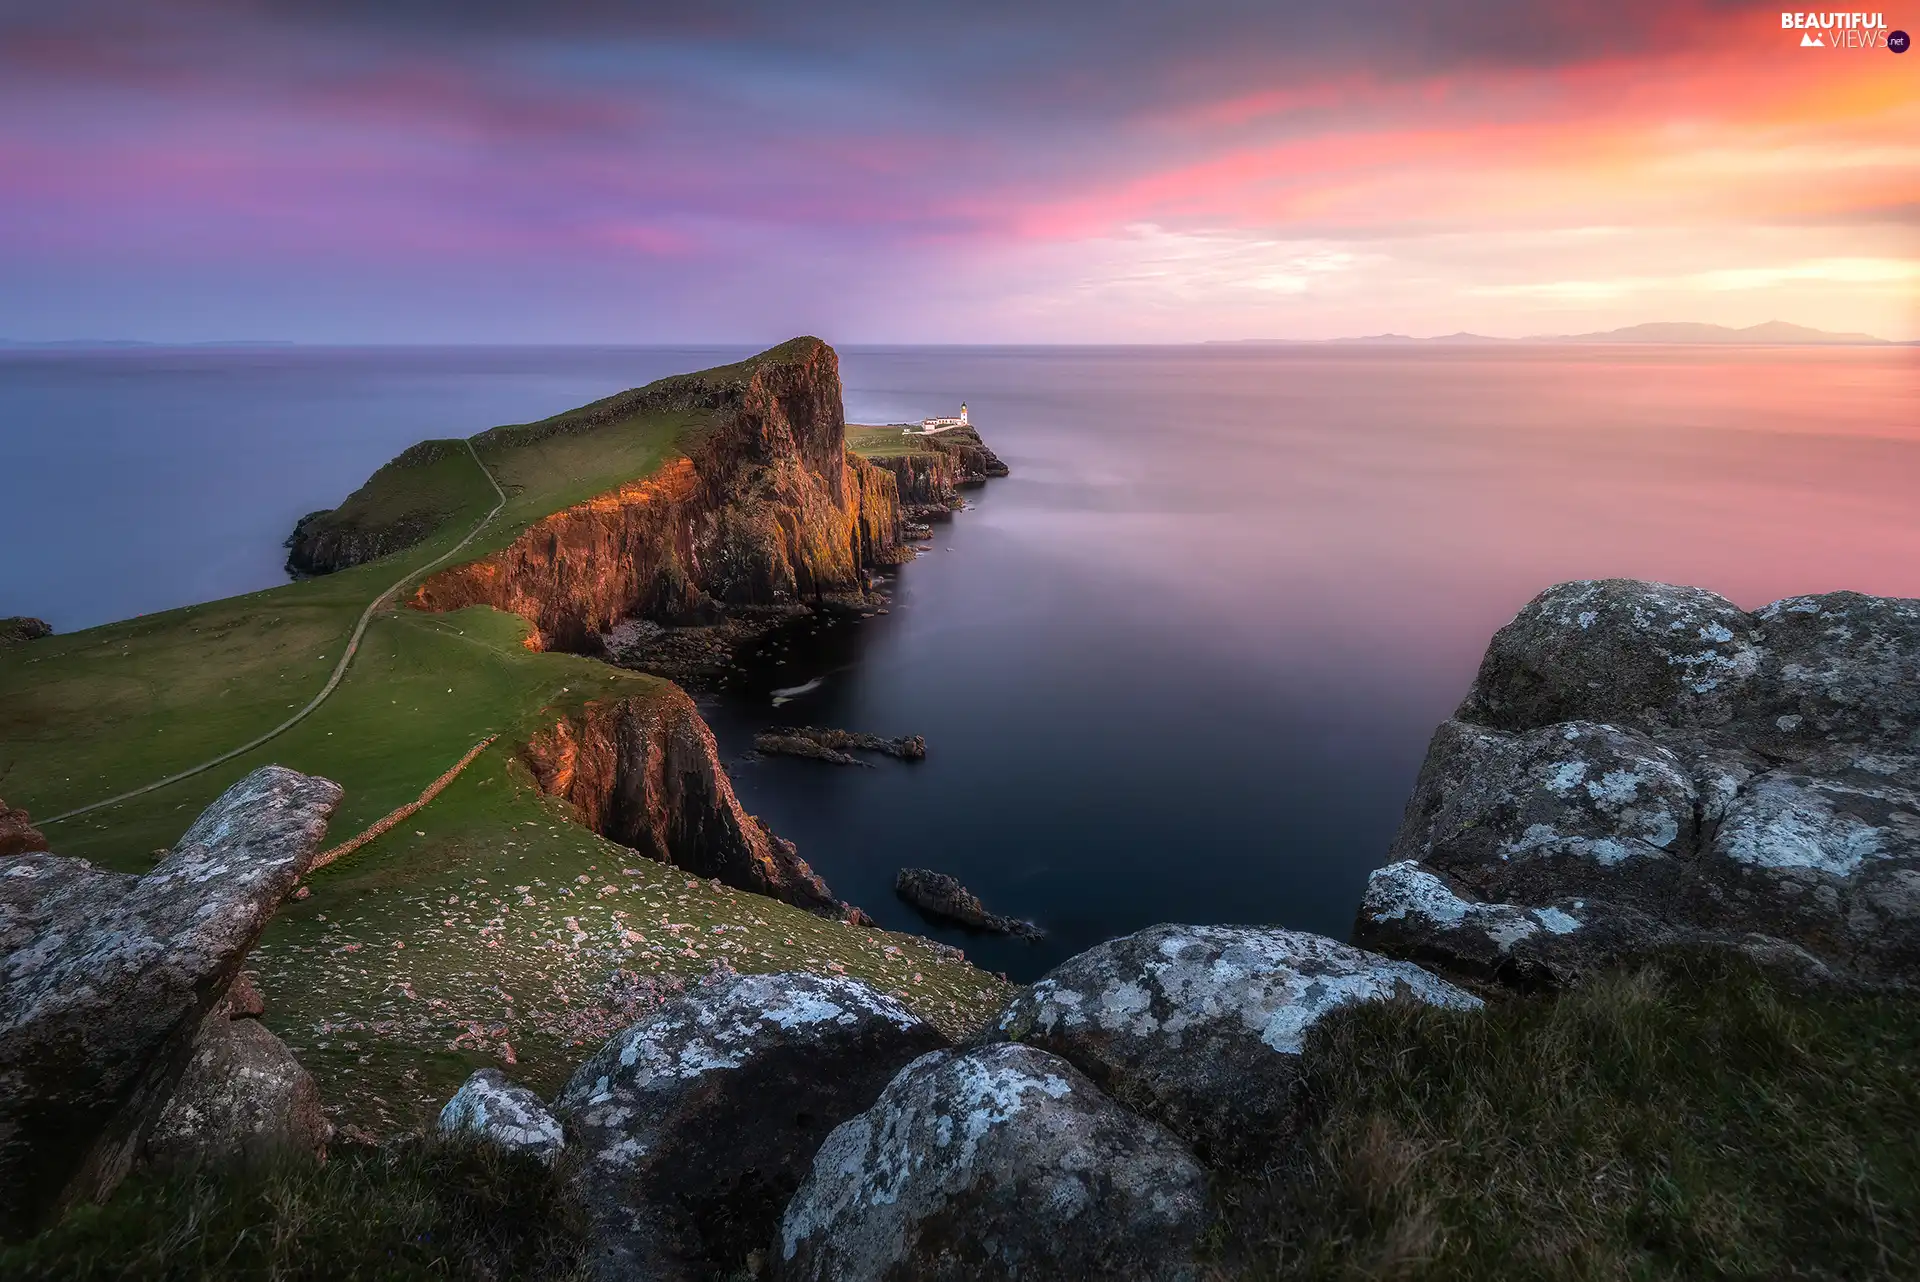 Coast, rocks, Scotland, Isle of Skye, Neist Point Lighthouse, Scottish Sea, Great Sunsets, Duirinish Peninsula